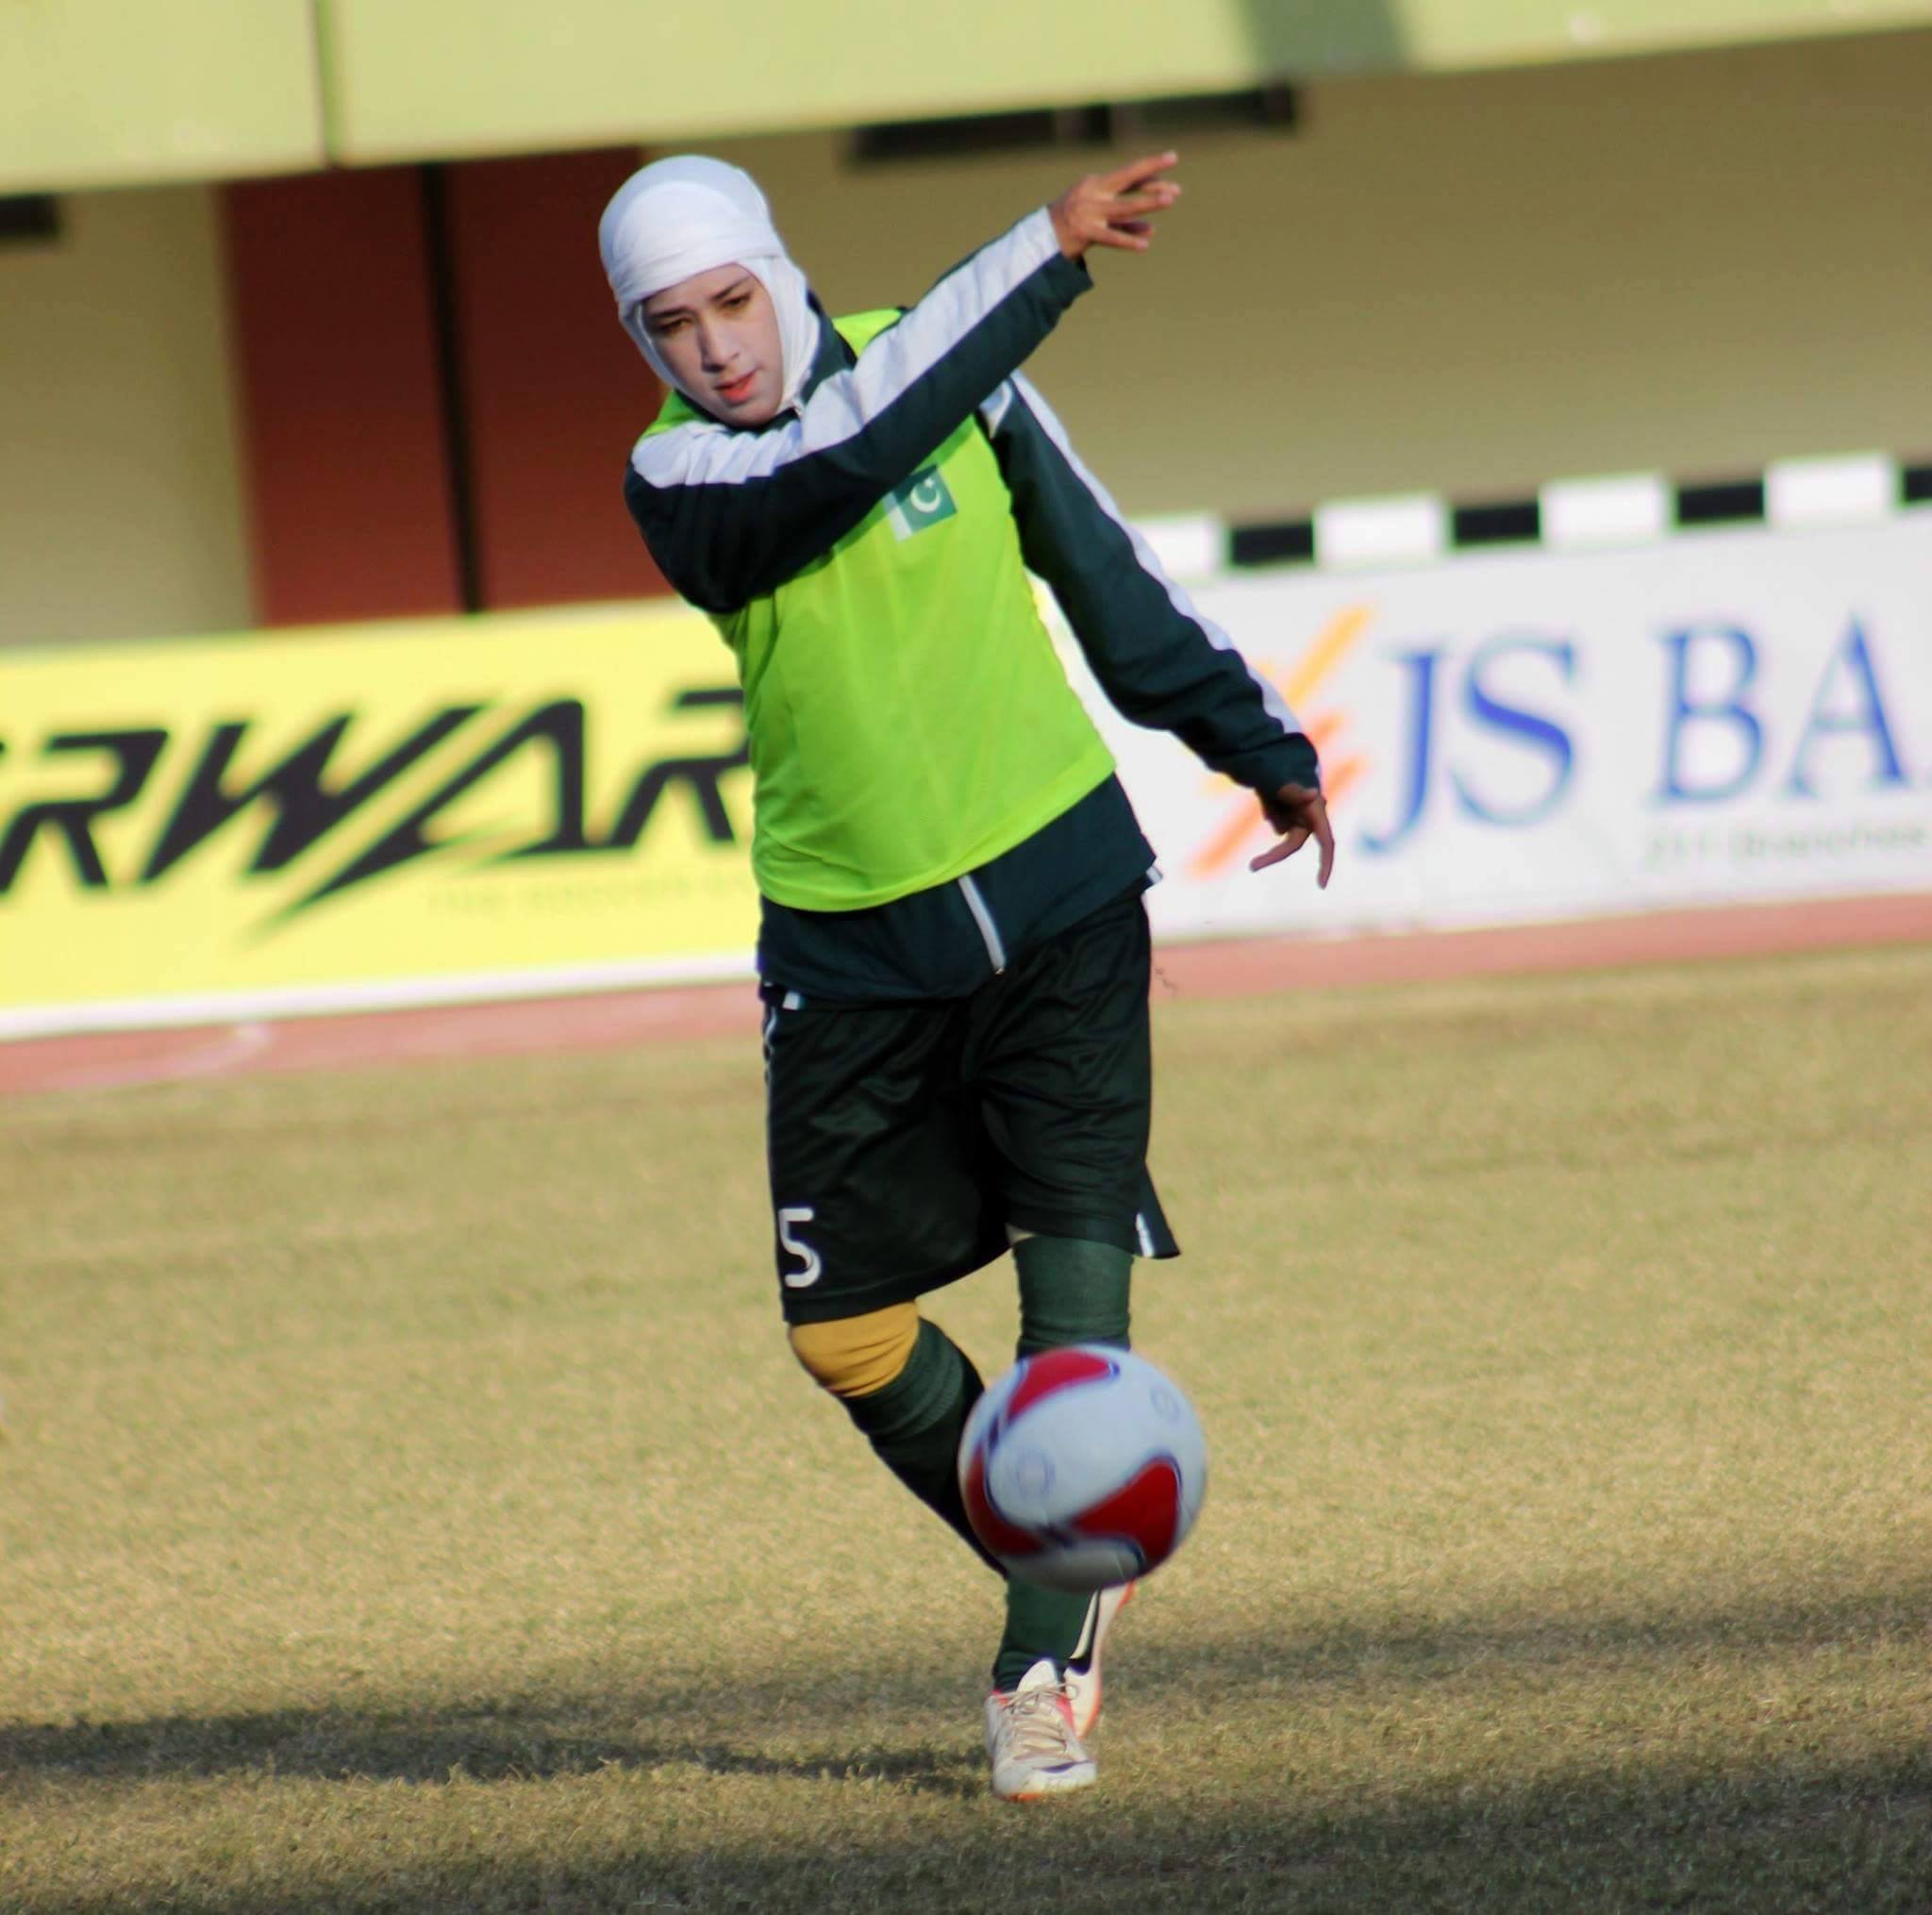 abiha haider throwing football during match